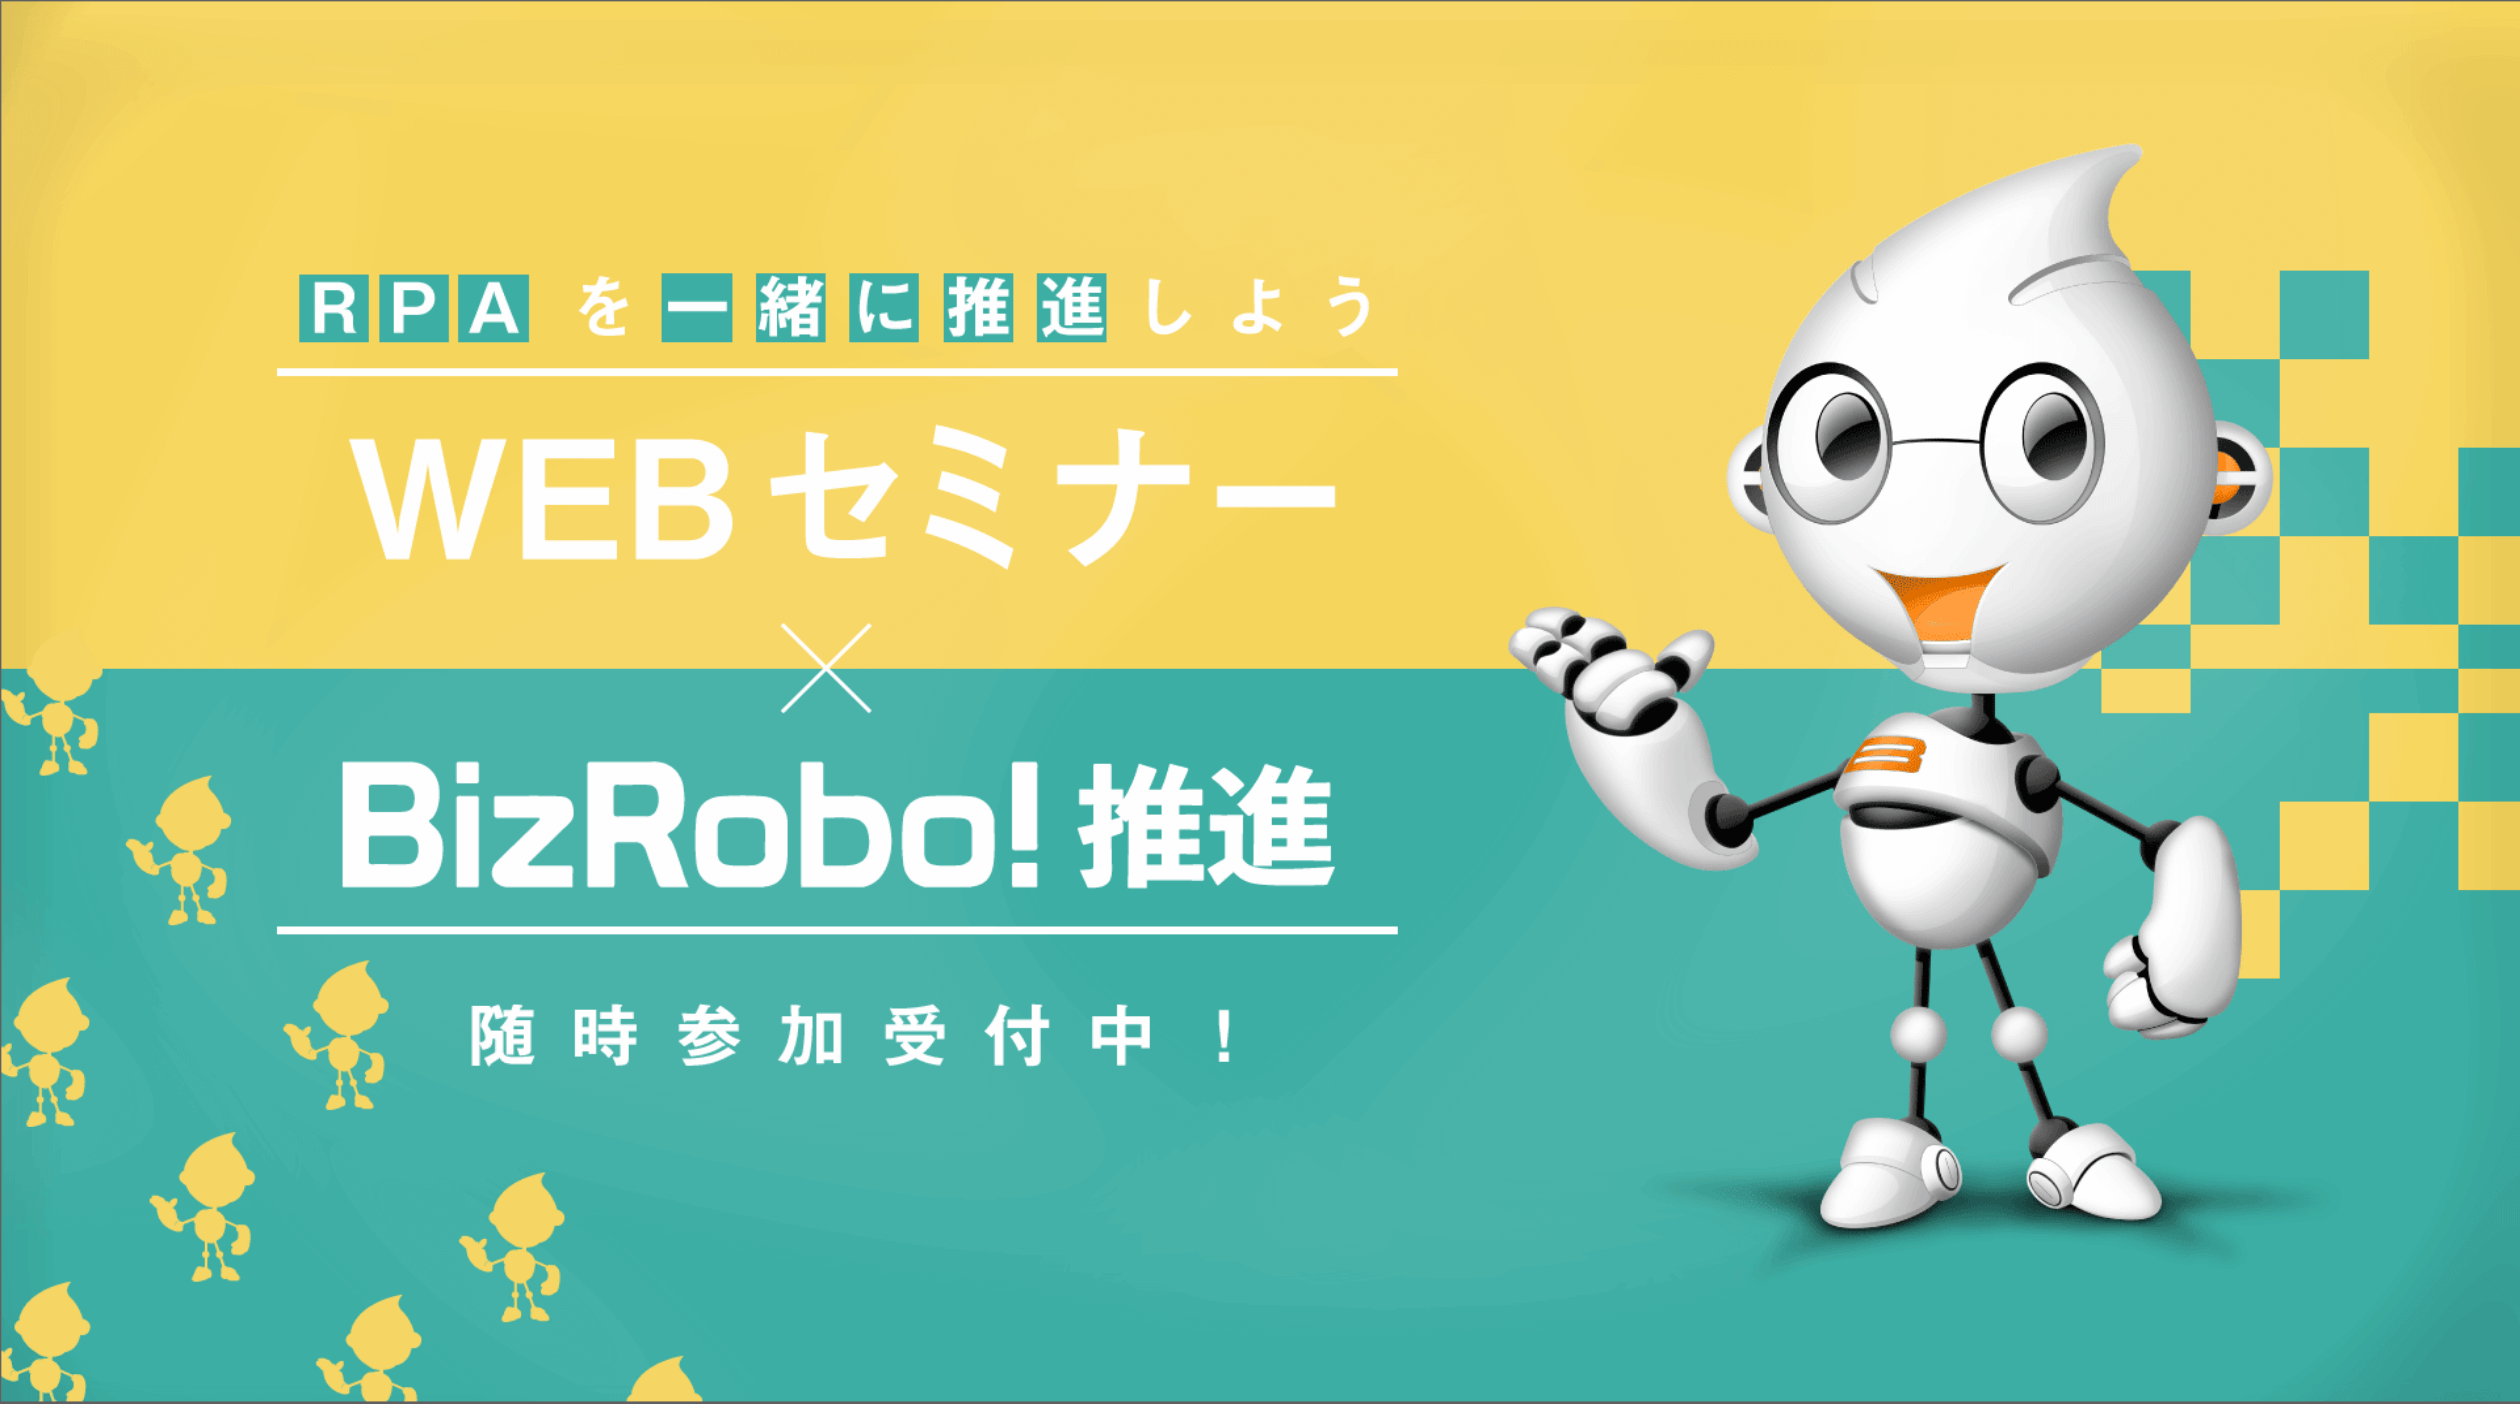 RPAを一緒に推進しよう WEBセミナー×BizRobo!推進 随時参加受付中！